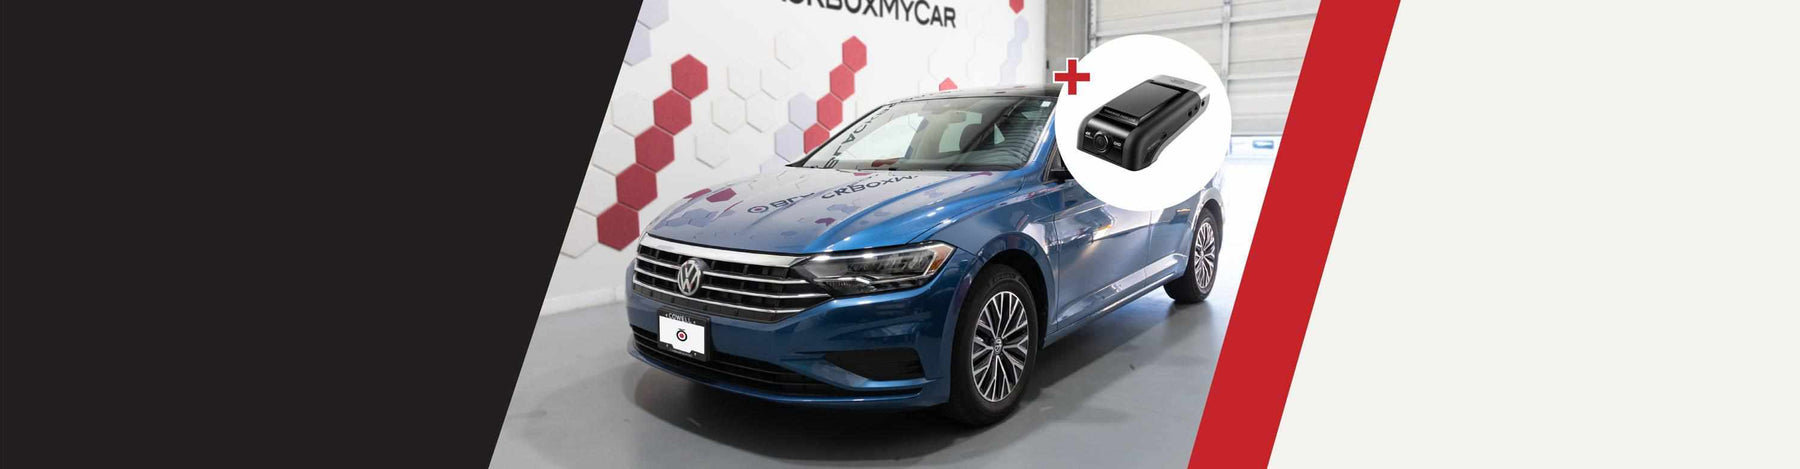 BlackboxMyCar | Dash Cam Installation: 2019 Volkswagen Jetta x Thinkware U1000 Dashcam - - BlackboxMyCar Canada